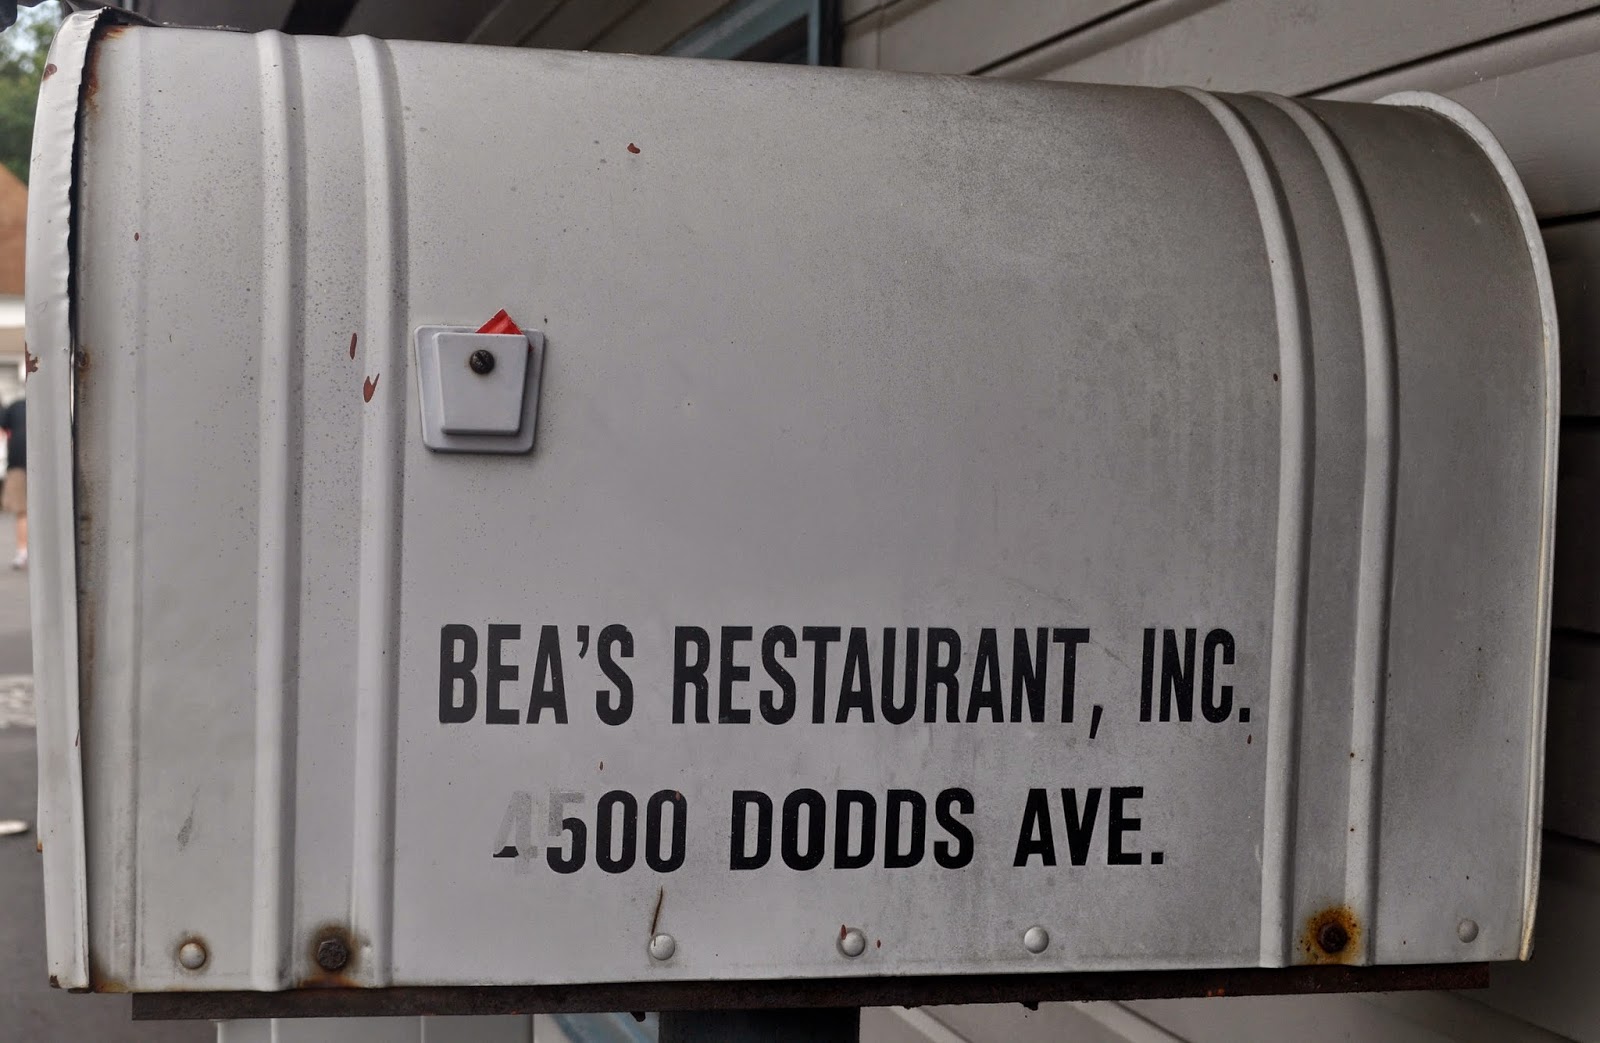  Bea's Restaurant